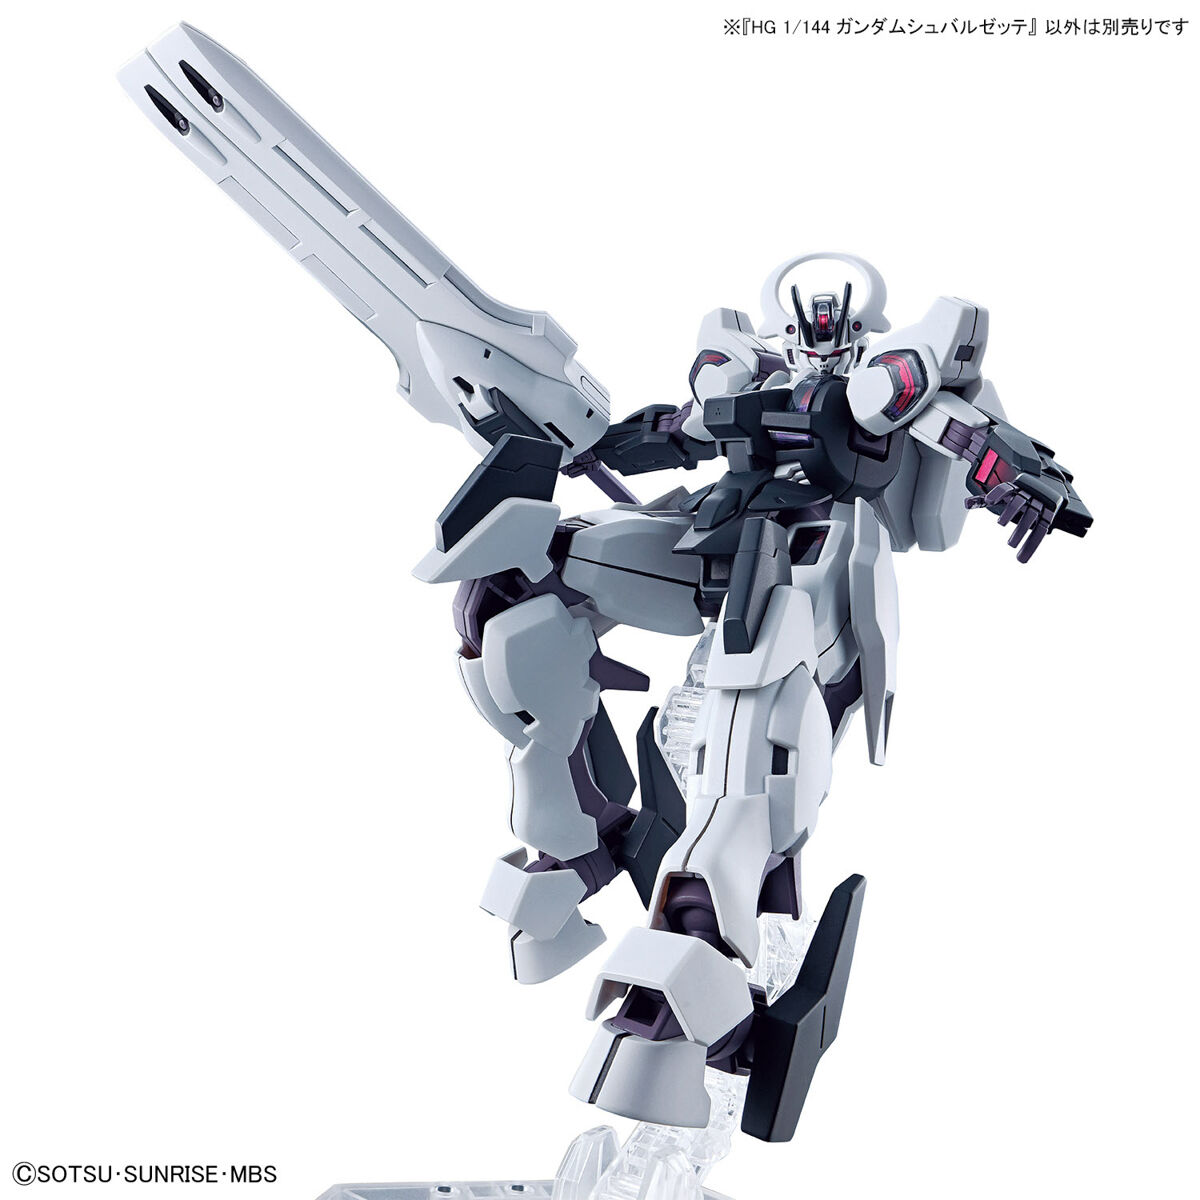 Gunpla HG 1/144 Gundam Schwarzette-Bandai-Ace Cards &amp; Collectibles